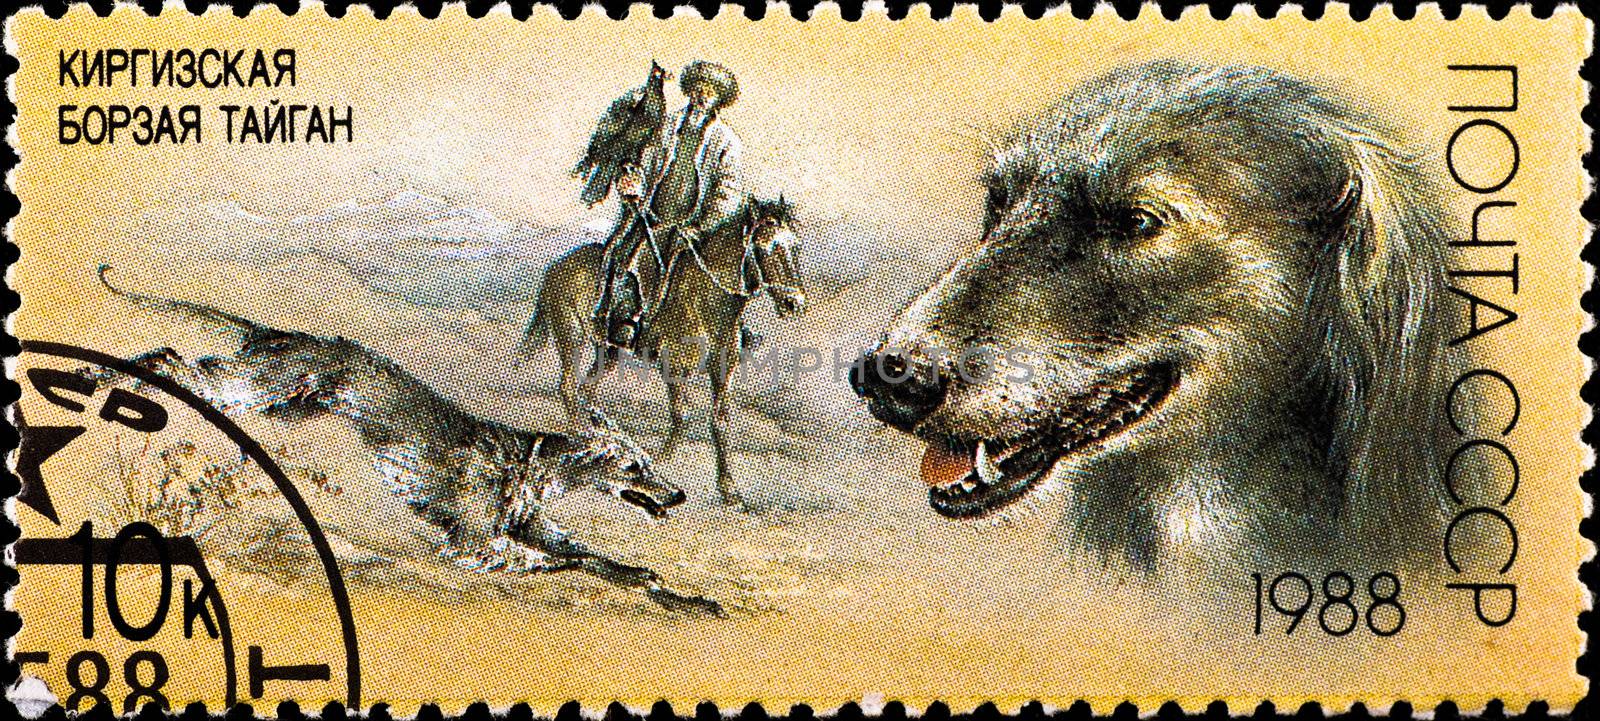 postage stamp shows kyrgyz greyhound by petr_malyshev